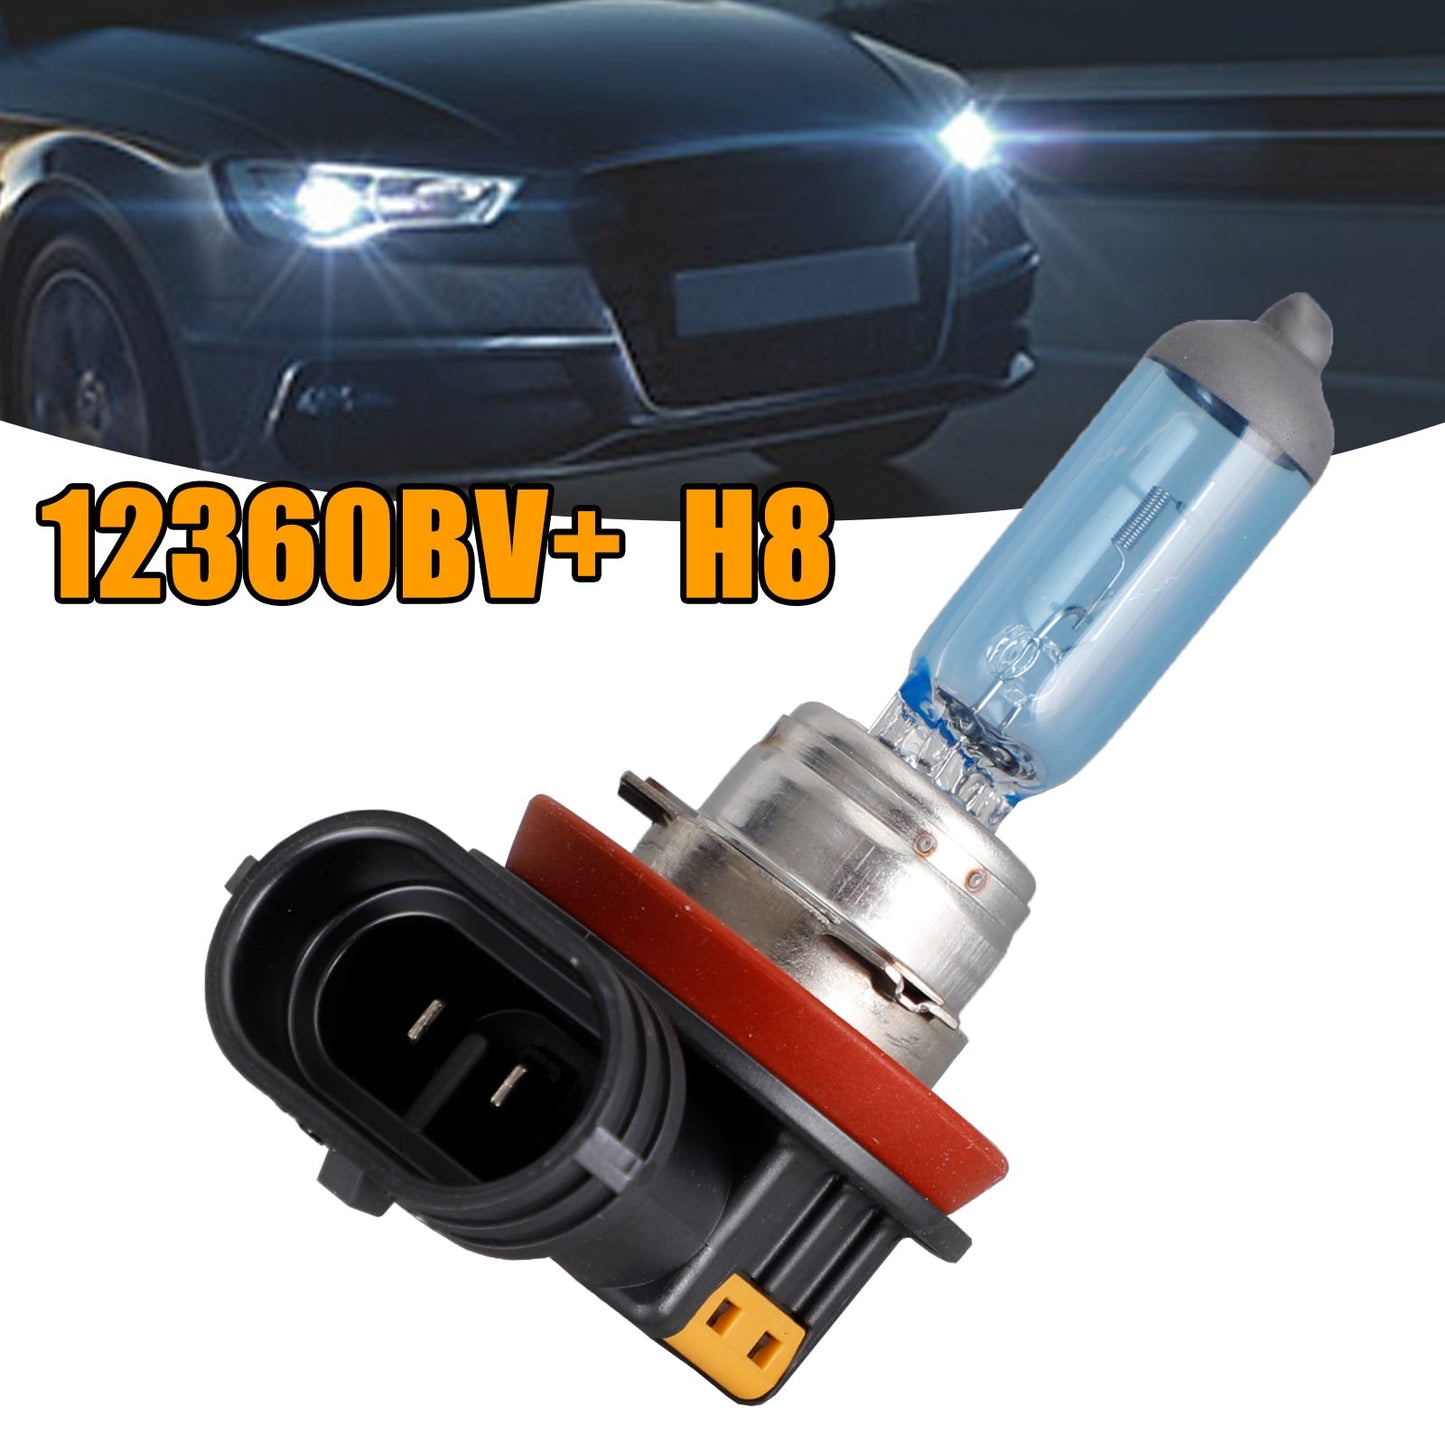 For Philips 12360BV+ BlueVision 4000K Car Headlight Bulbs H8 12V35W PGJ19-1